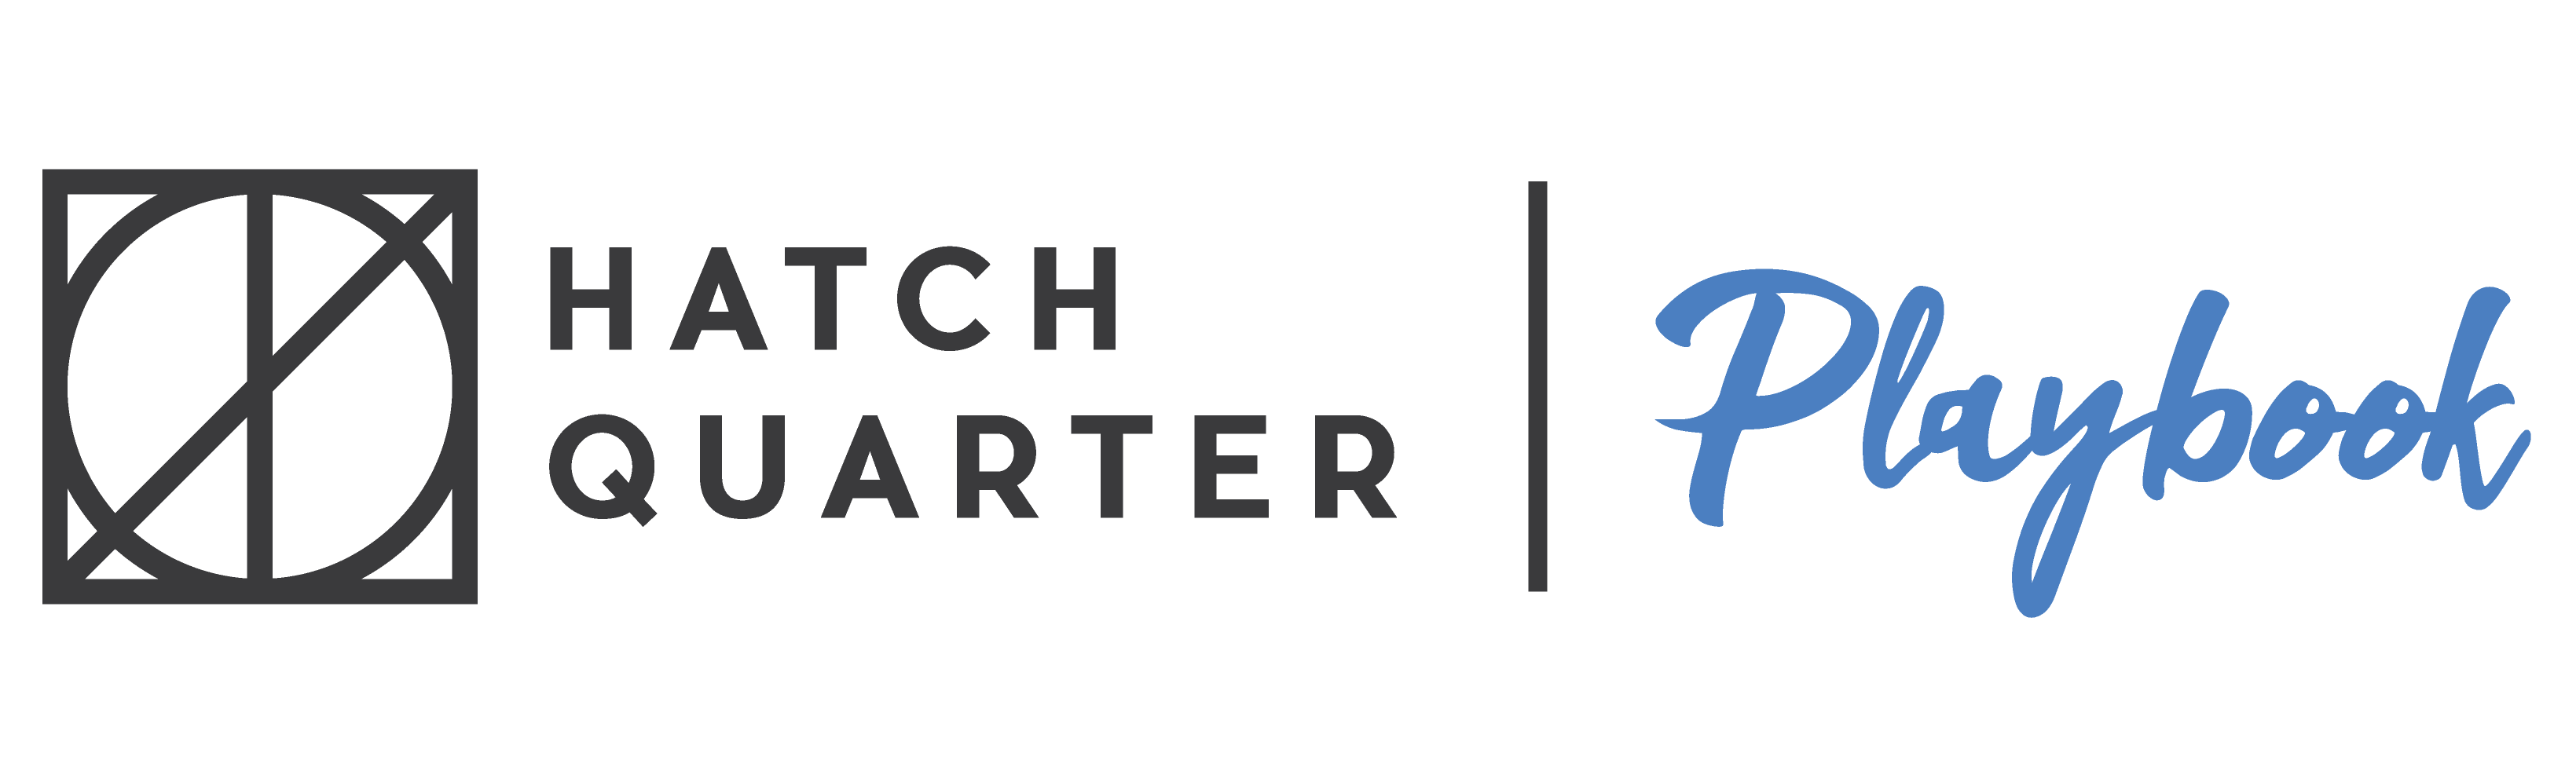 HatchQuarter_Playbook_logo